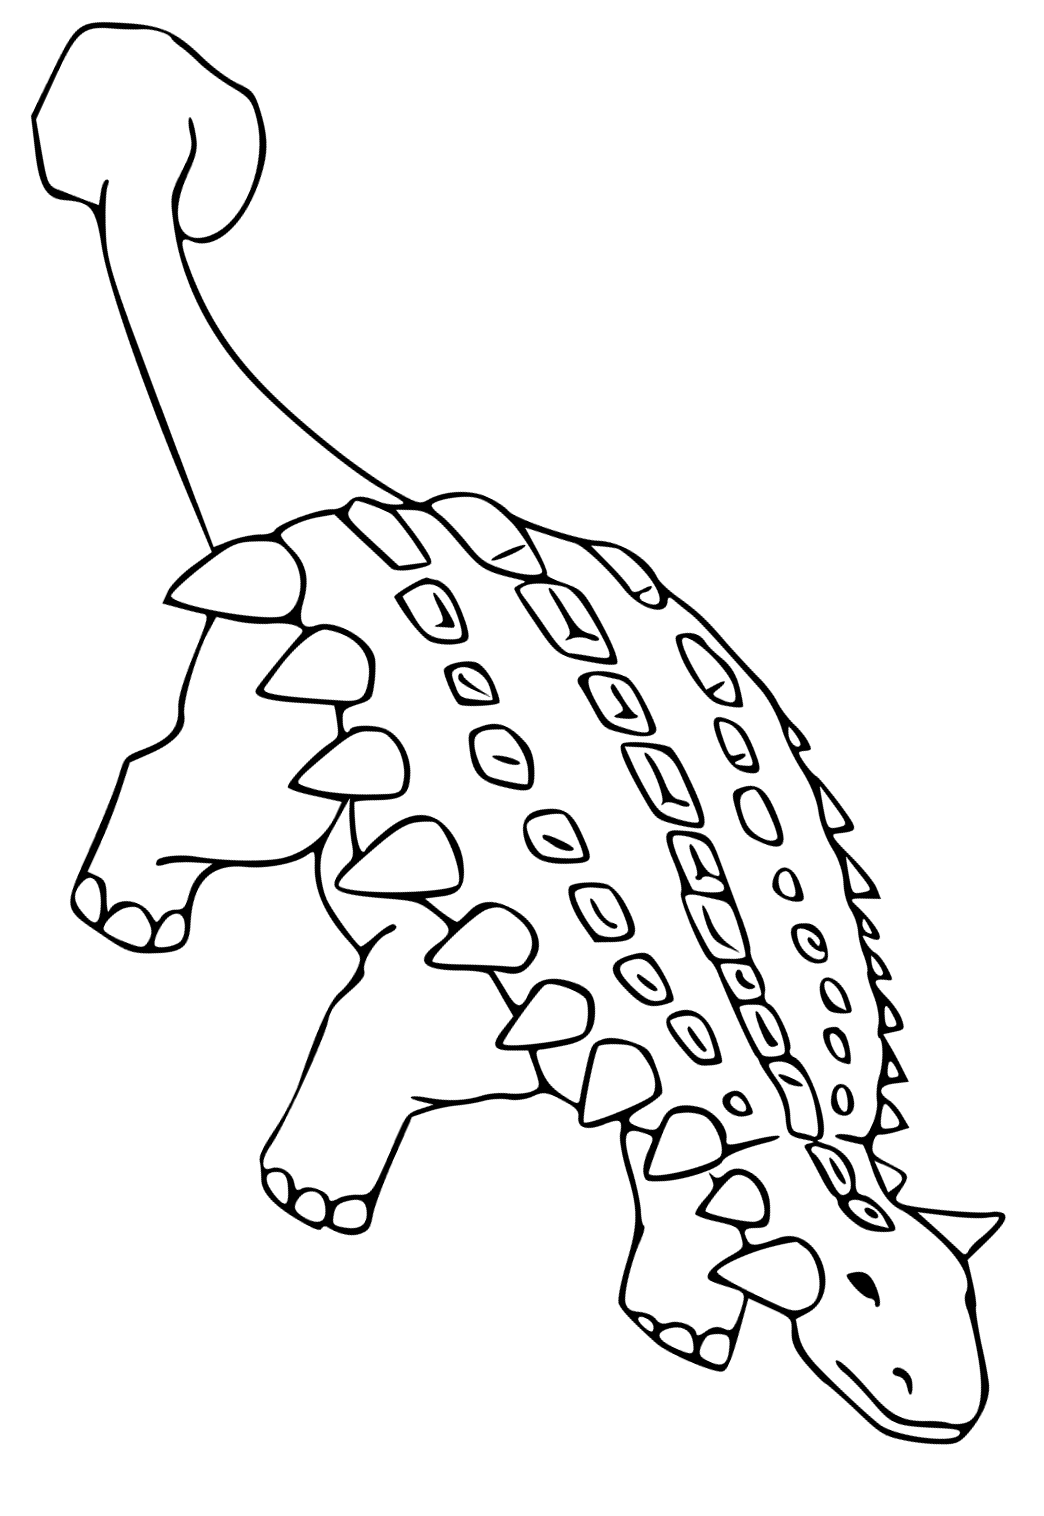 Dinozor